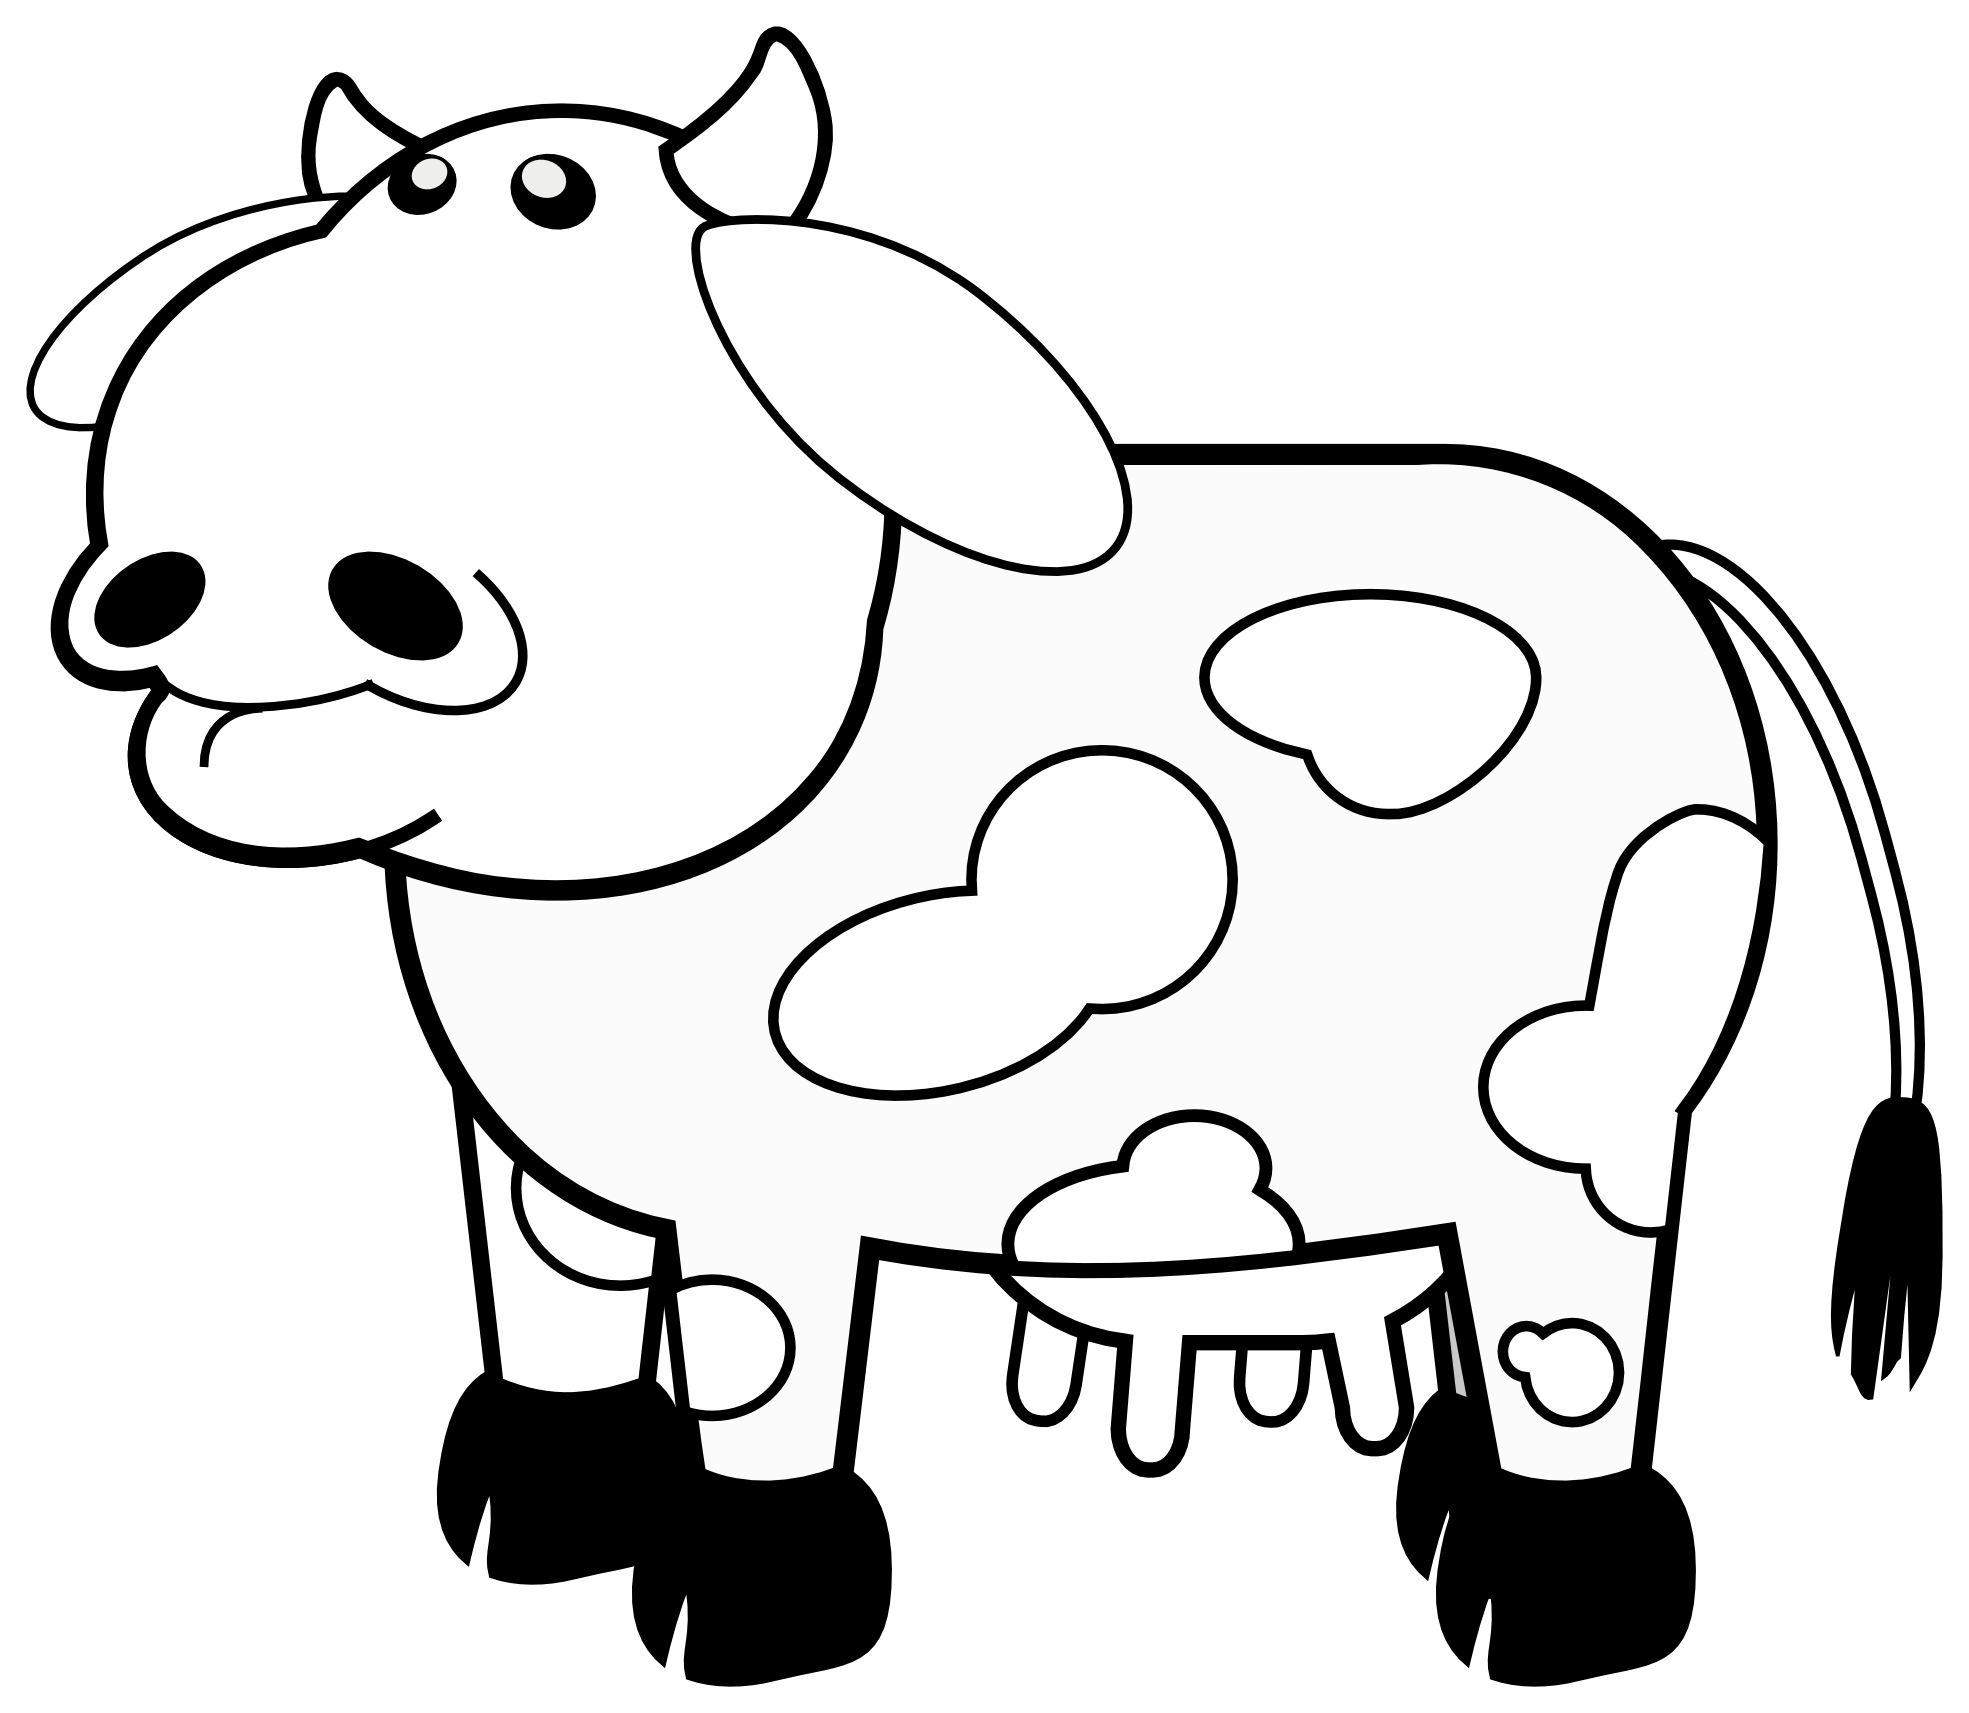 Colour Cows 1 Black White Line Art SVG Inkscape Adobe Illustrator 